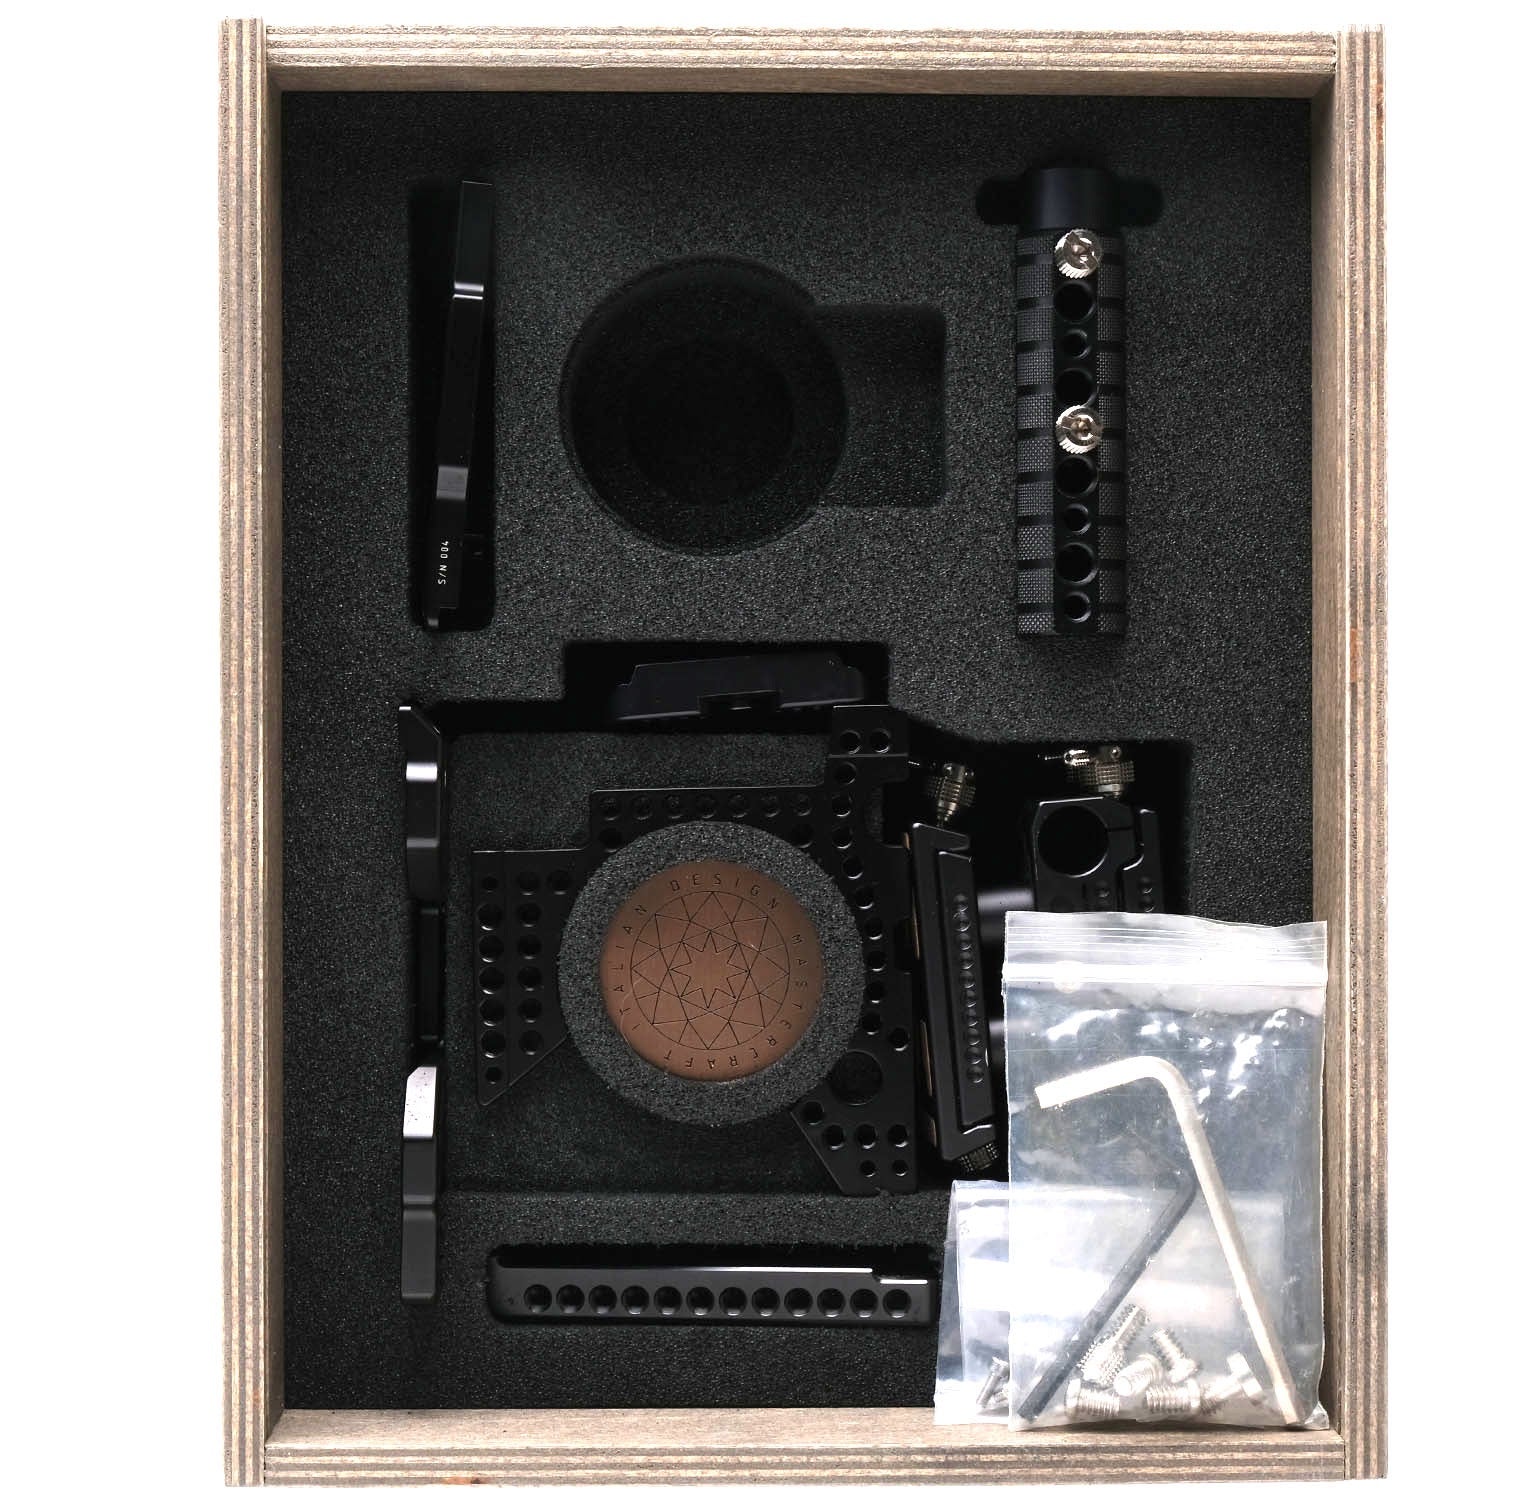 LockCircle MetalJacket for Leica SL 601, Boxed 4